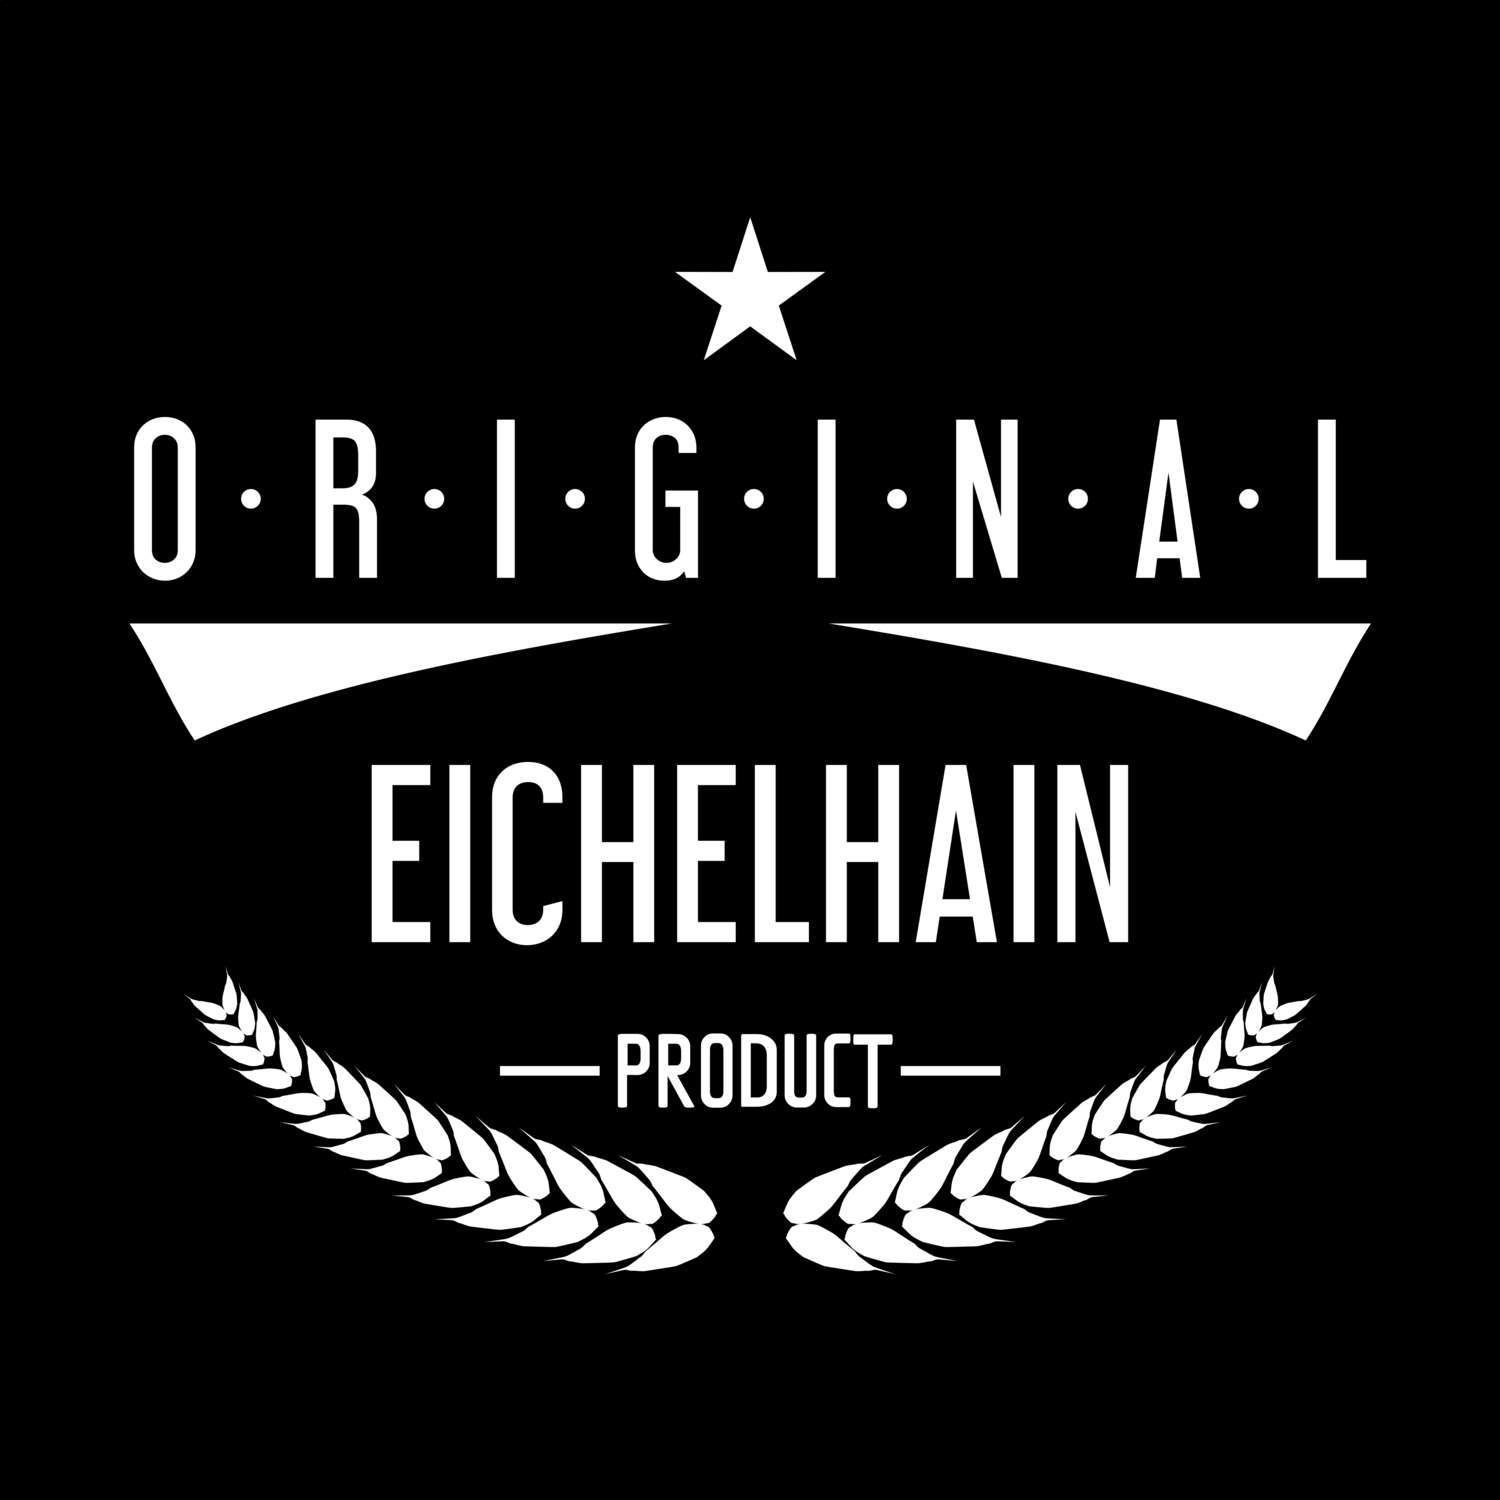 Eichelhain T-Shirt »Original Product«